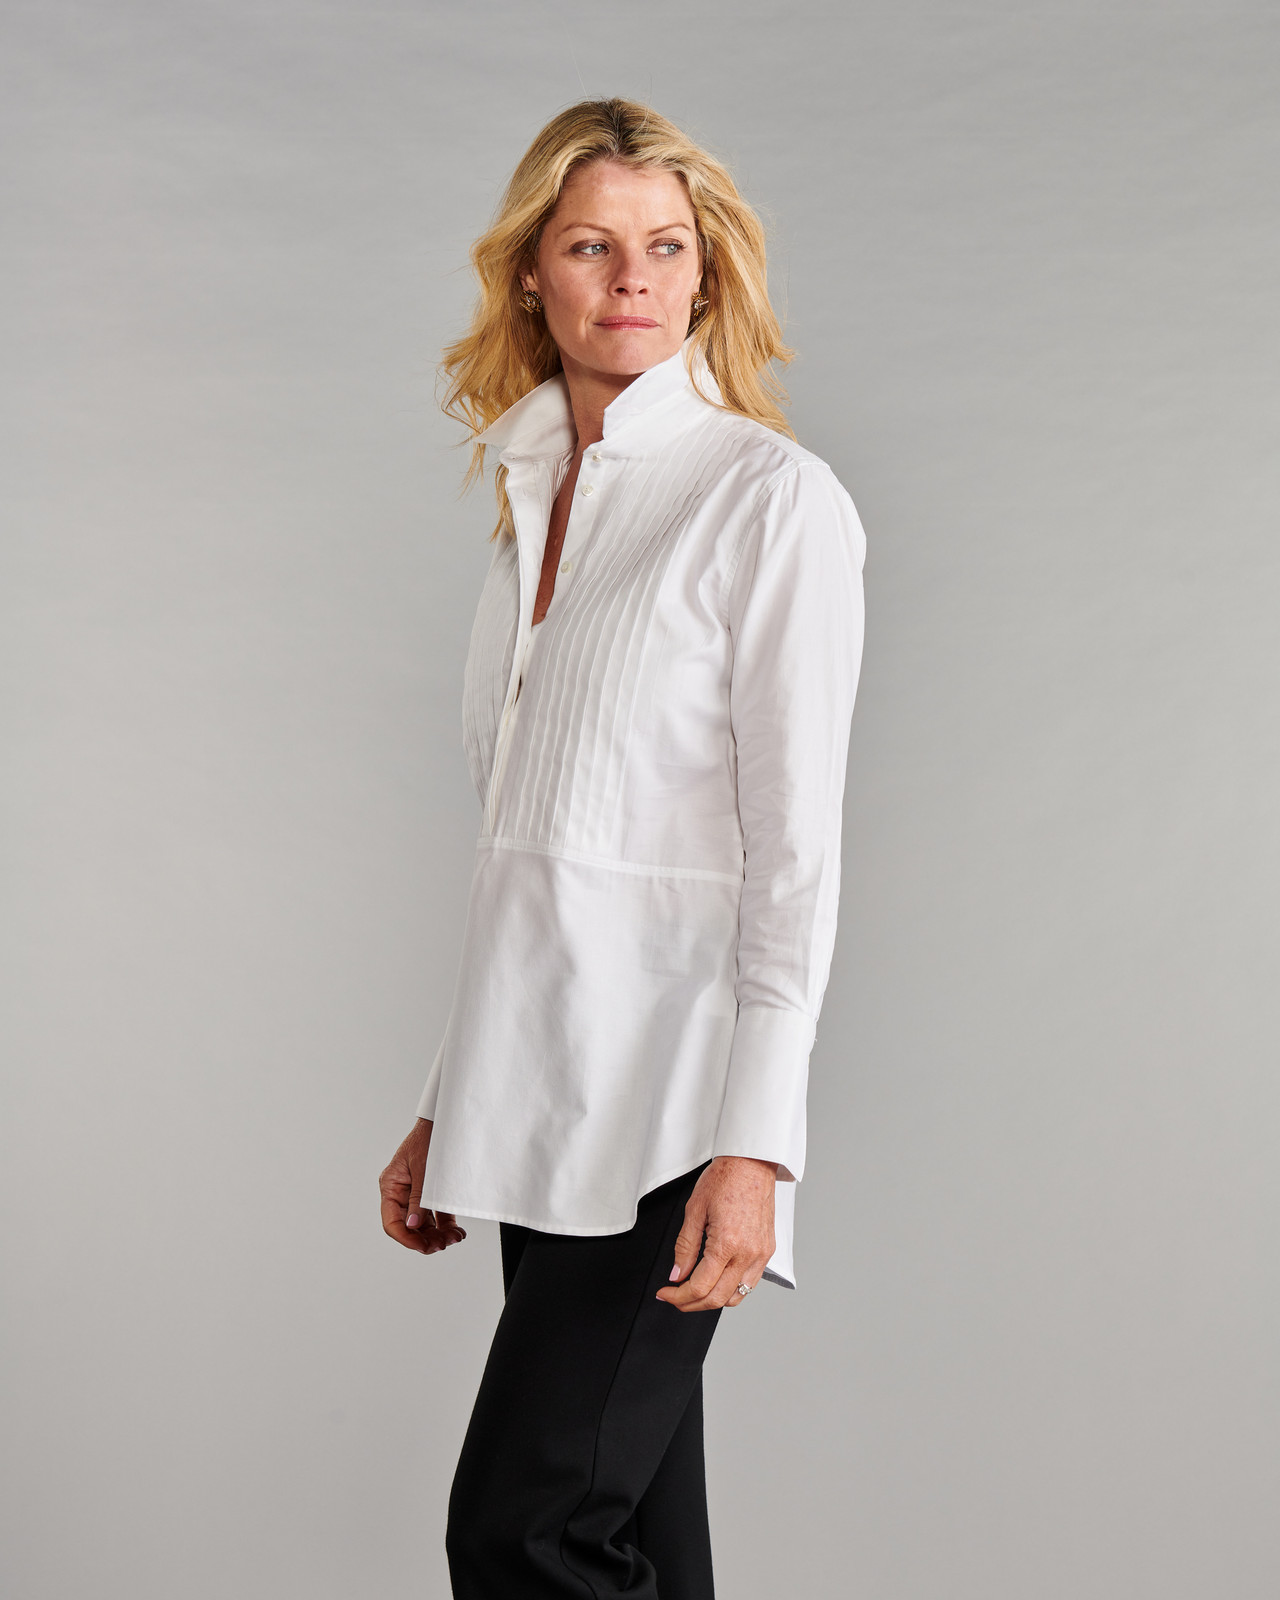 The Great White Shirt, No. 1 | White Shirts for Women